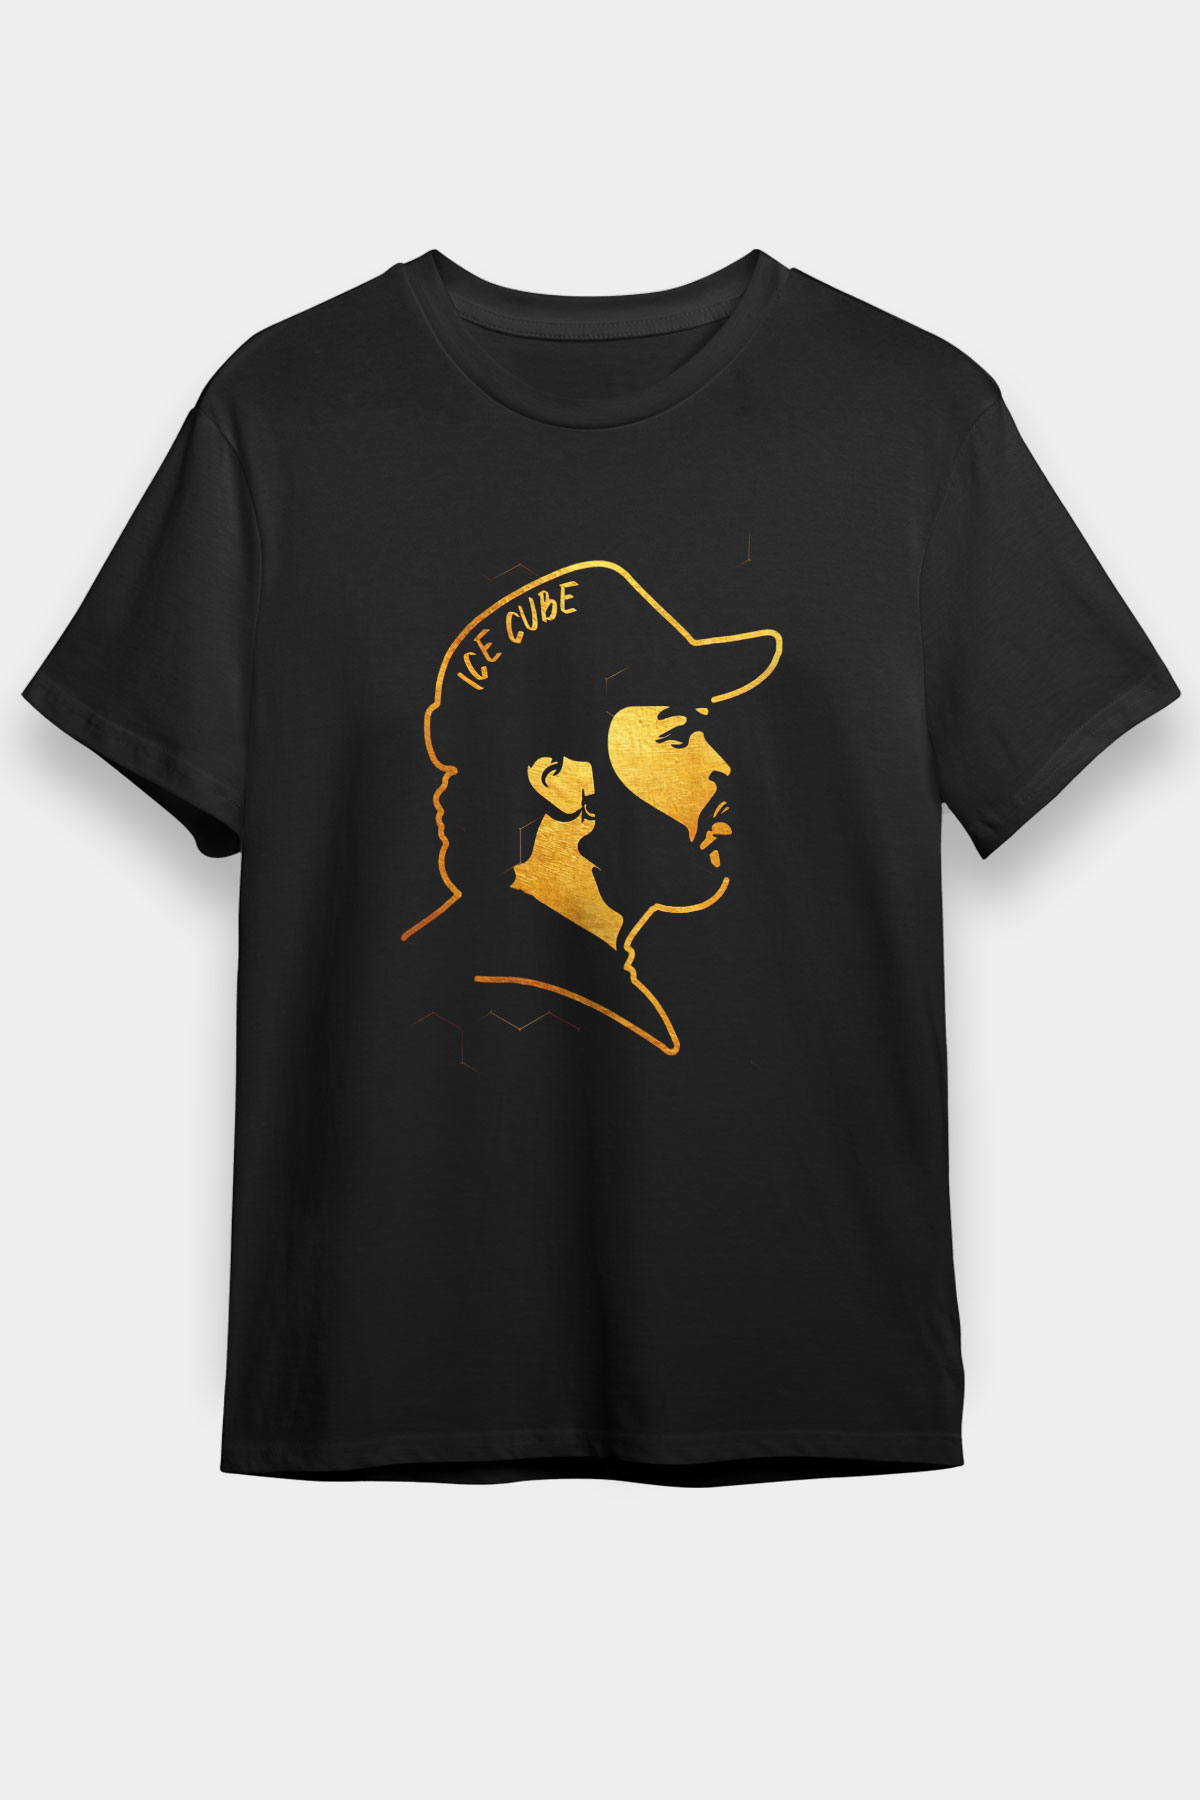 Ice Cube T shirt,Hip Hop,Rap Tshirt 15/